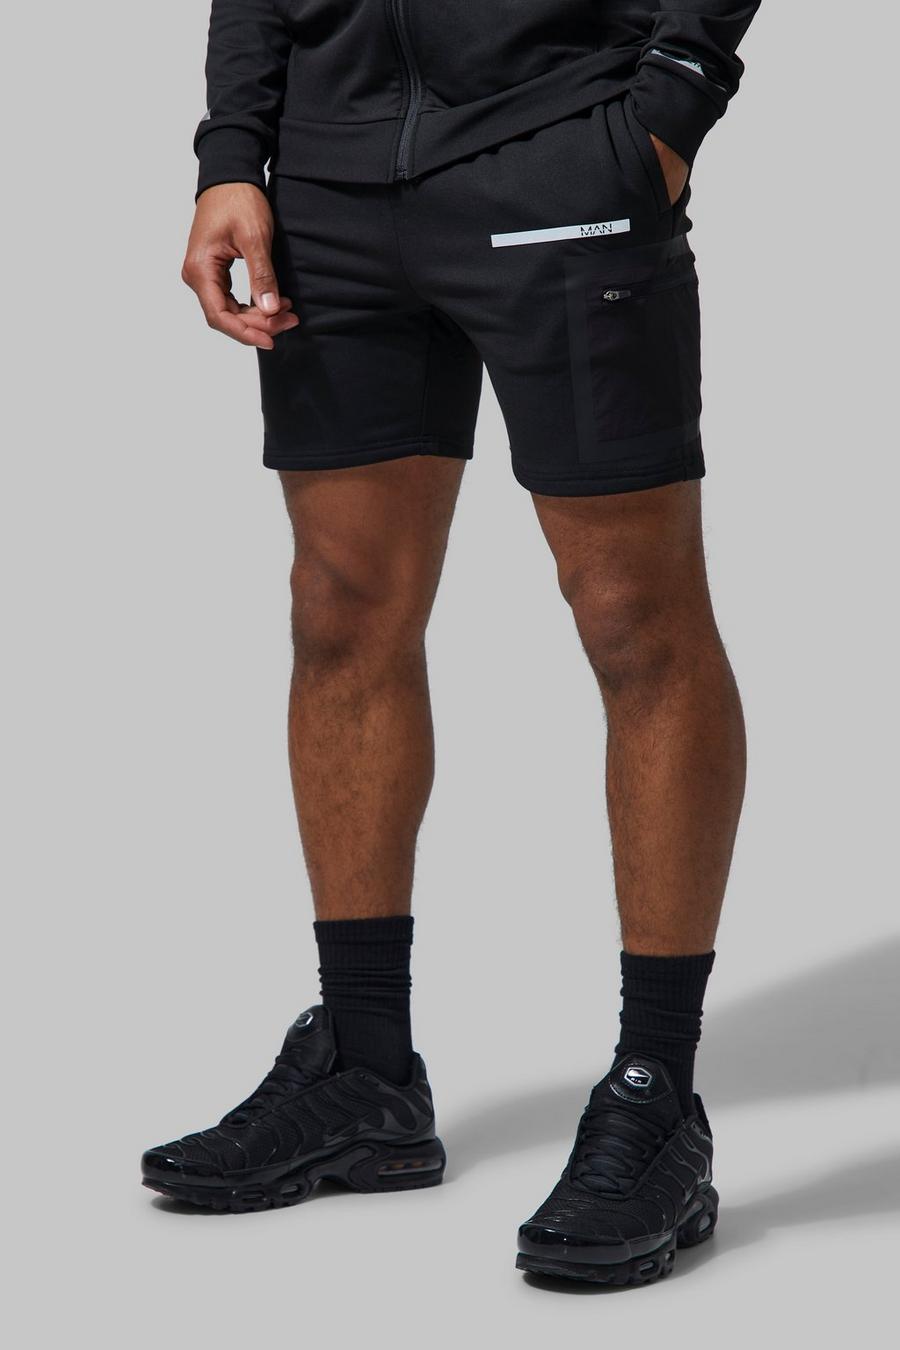 Pantalón corto cargo MAN Active resistente, Black negro